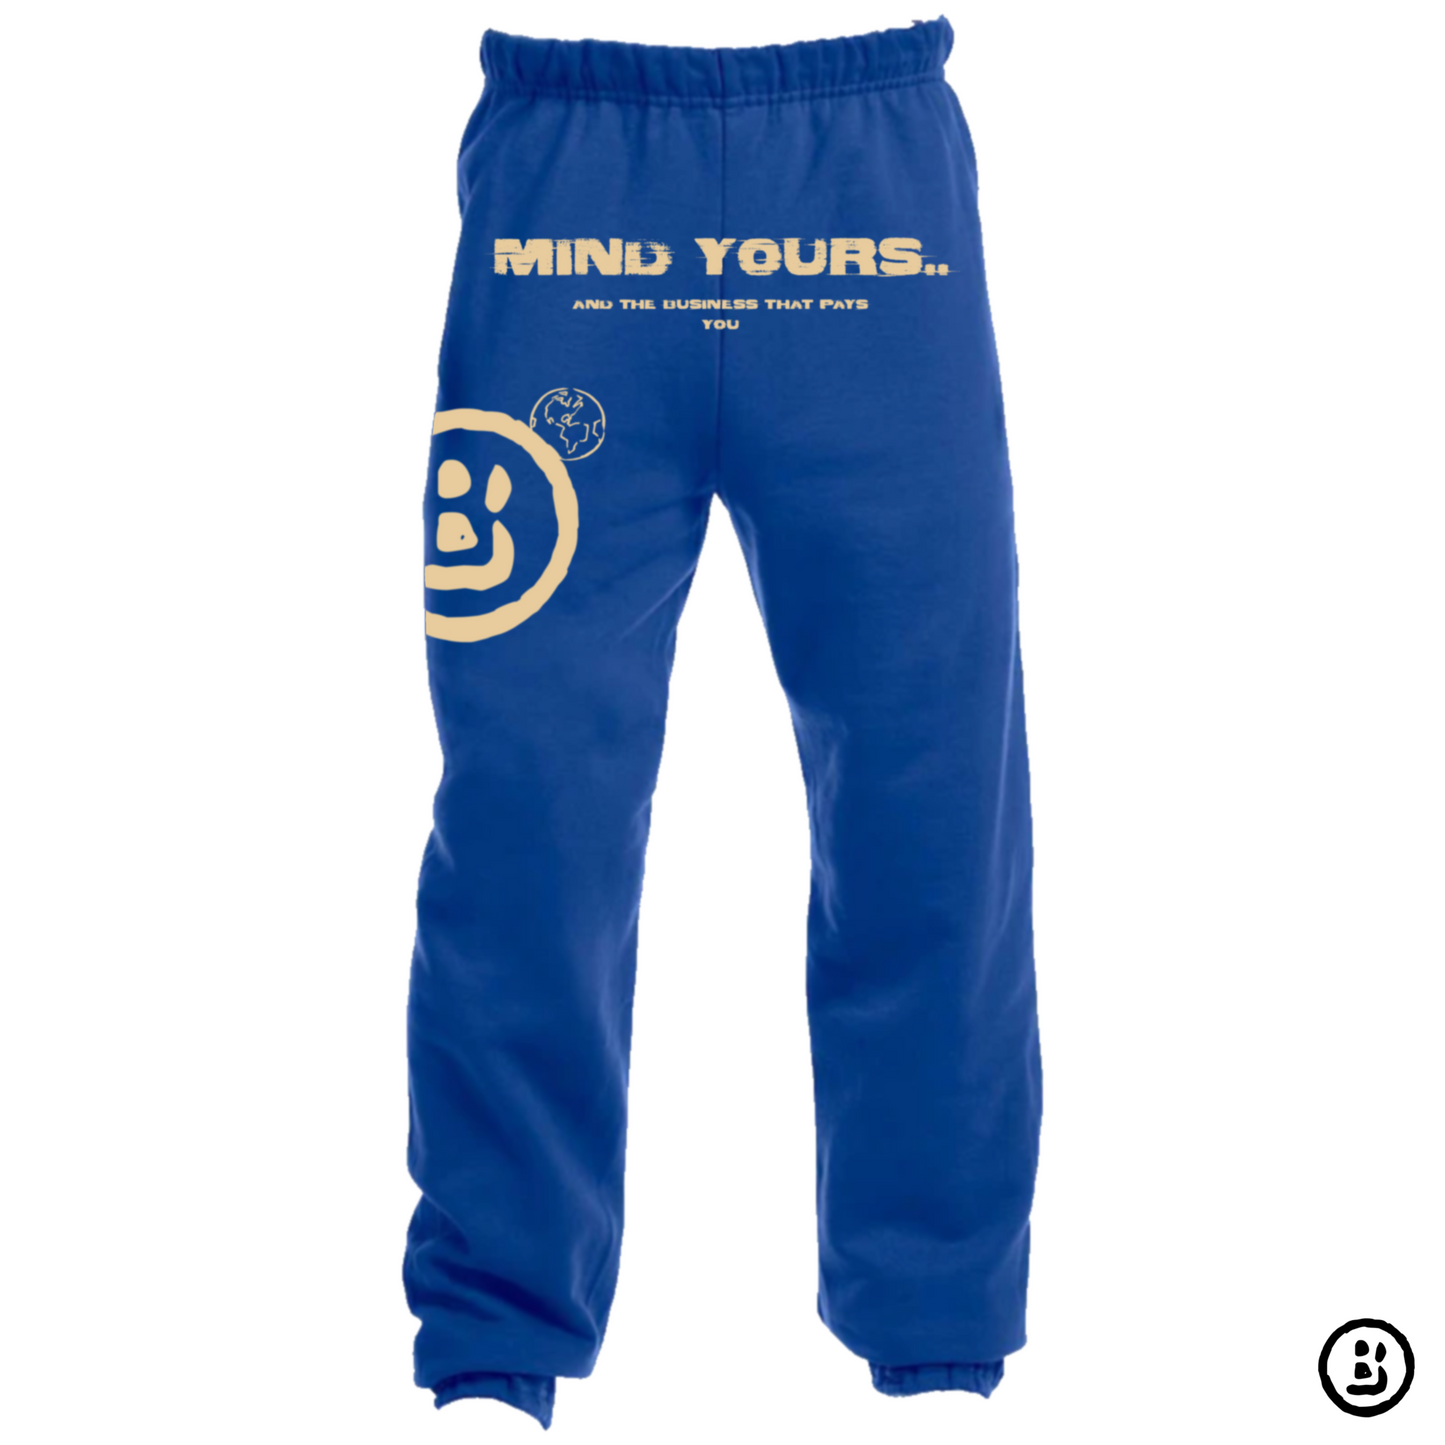 “UHTF” Royal Blue Cuffed Sweatpants